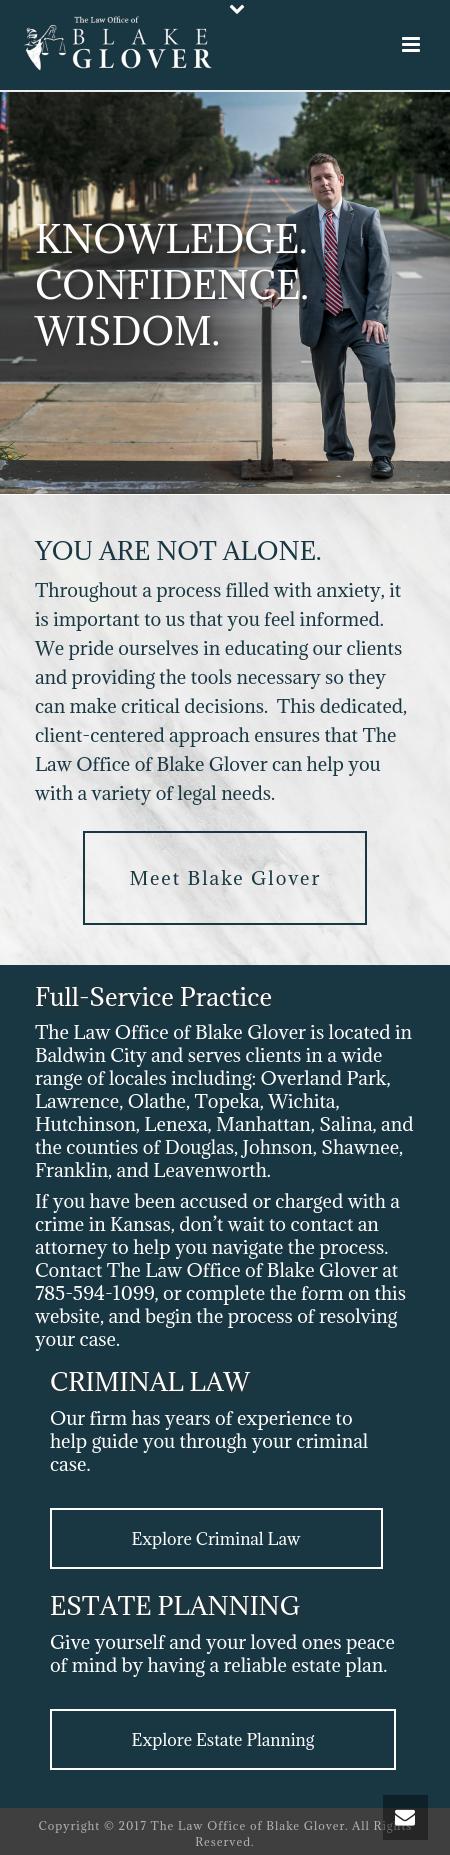 The Law Office of Blake Glover - Baldwin City KS Lawyers